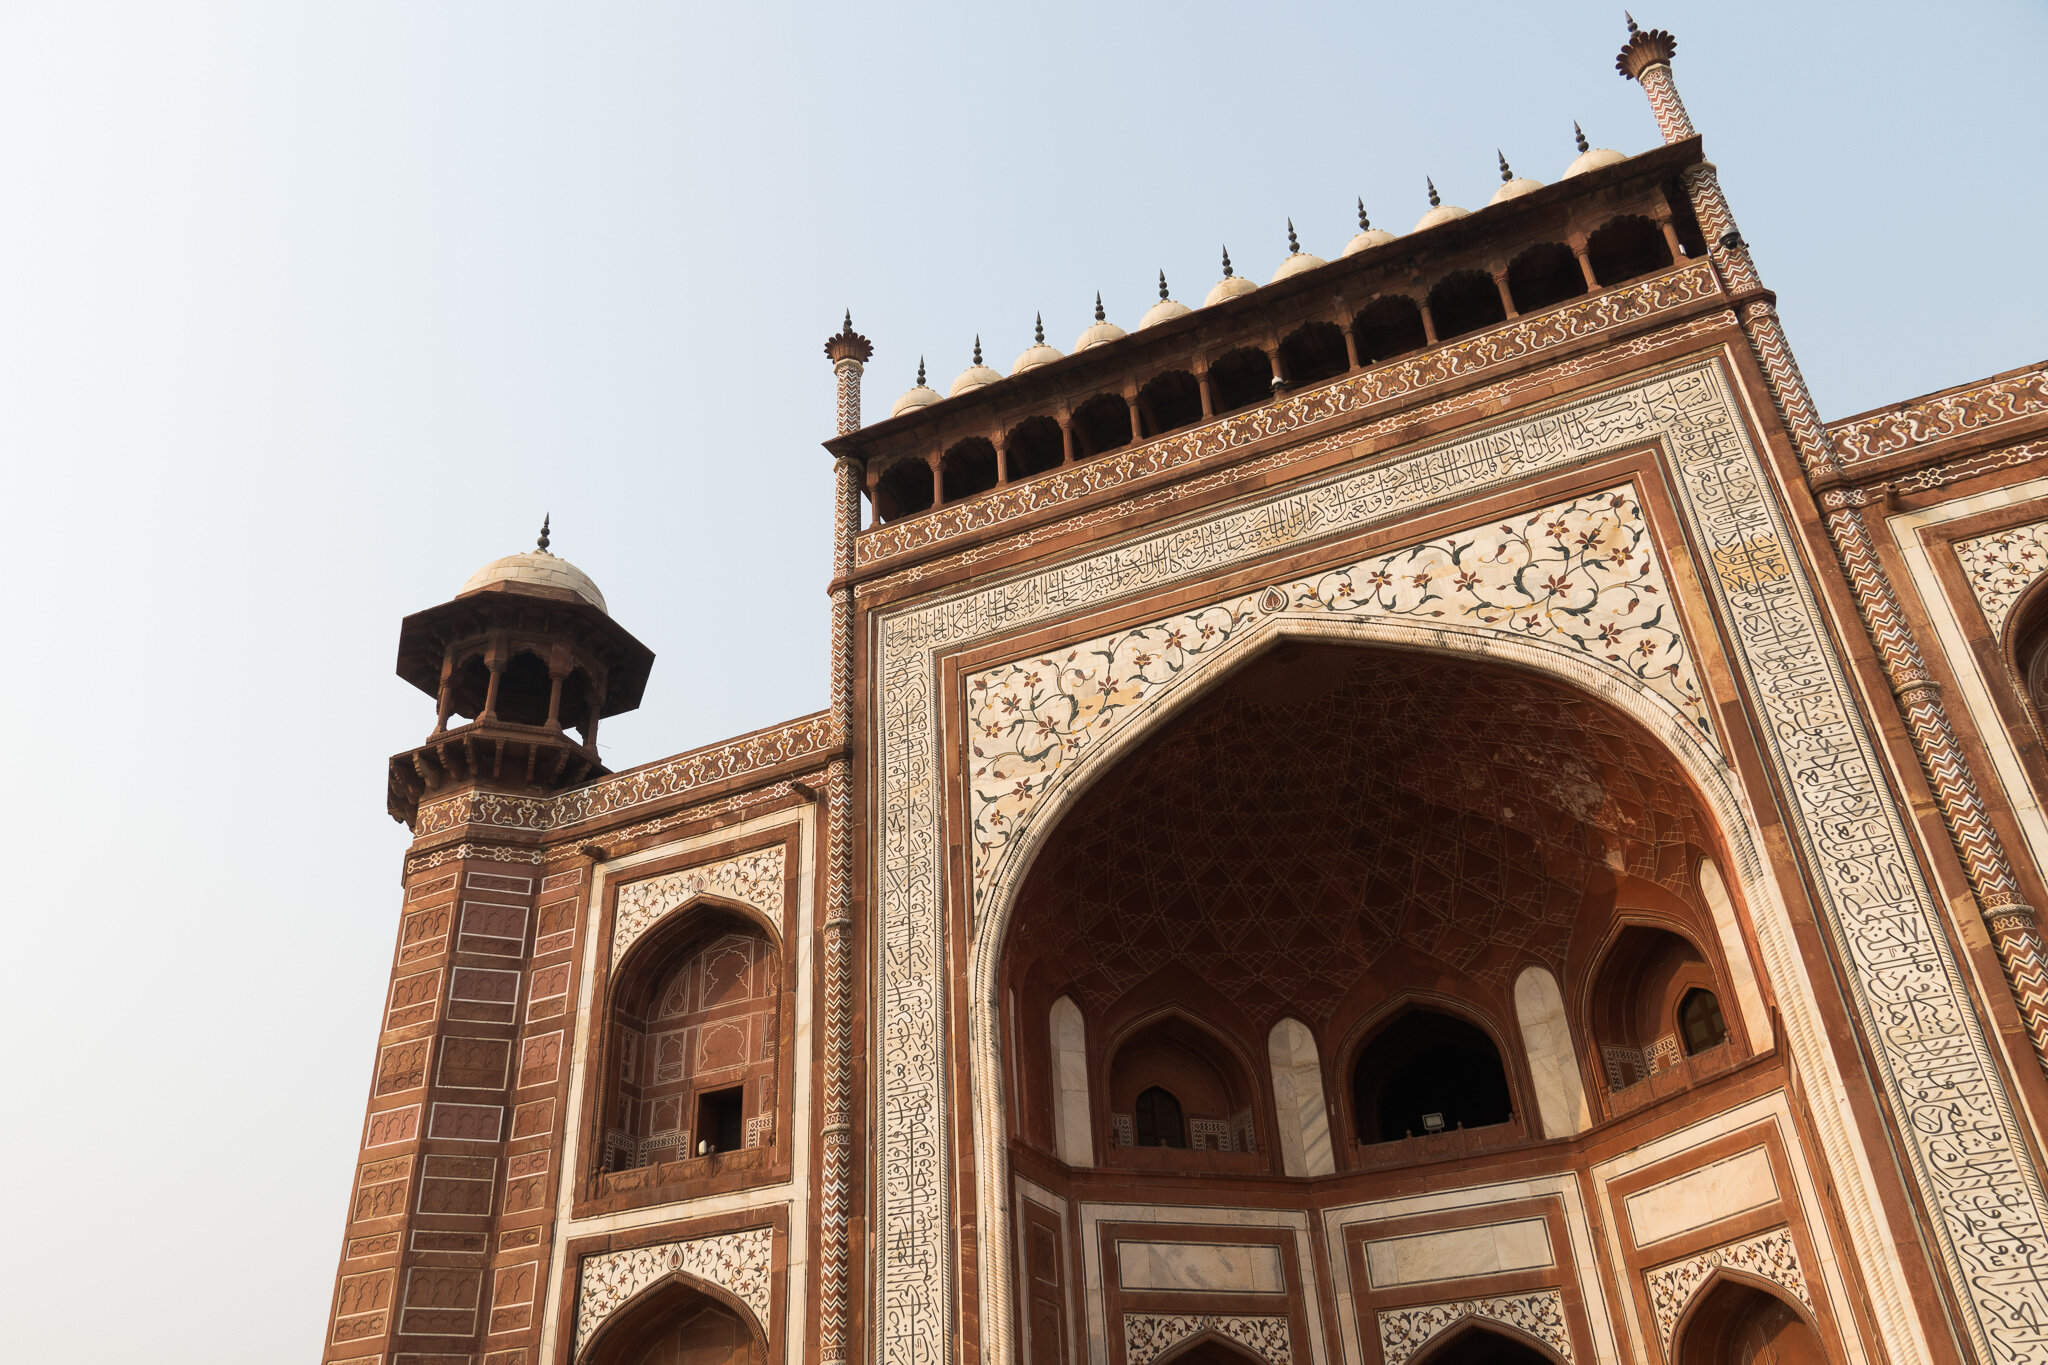 Entrance Gate to Taj Mahal